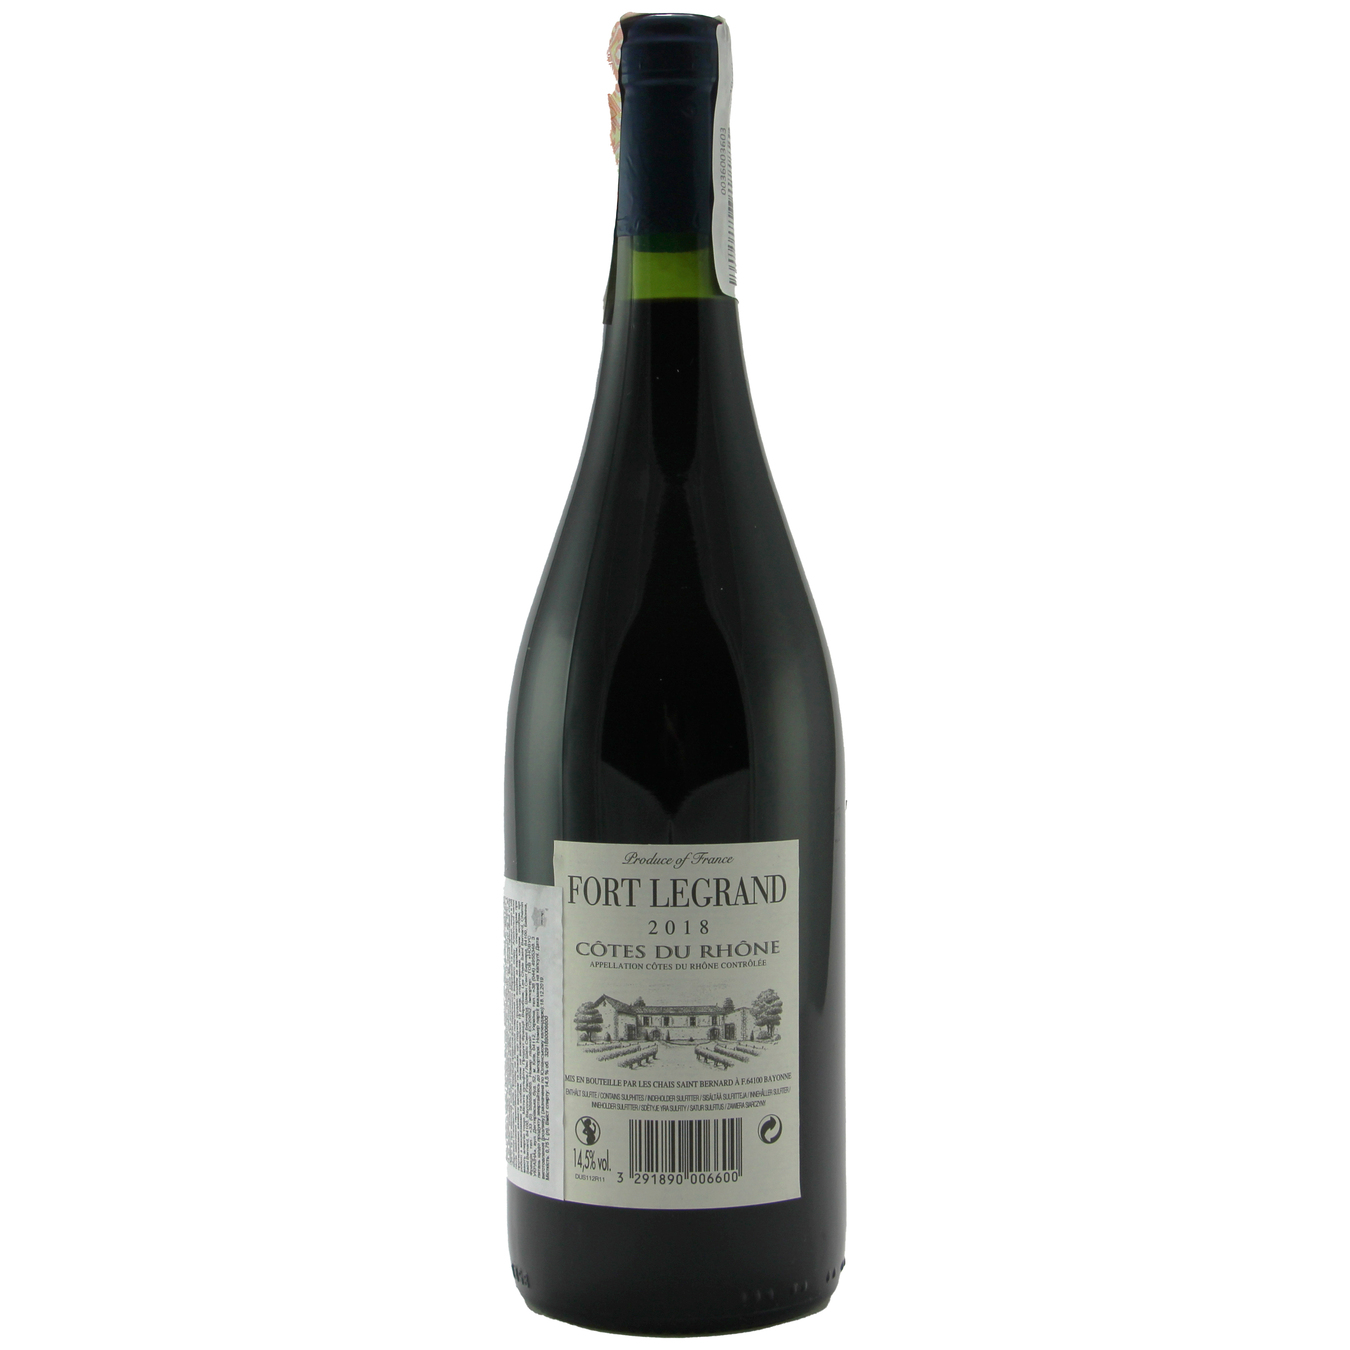 Chais Saint Bernard Fort Legrand Cotes du Rhone red dry wine 13% 0,75l 2